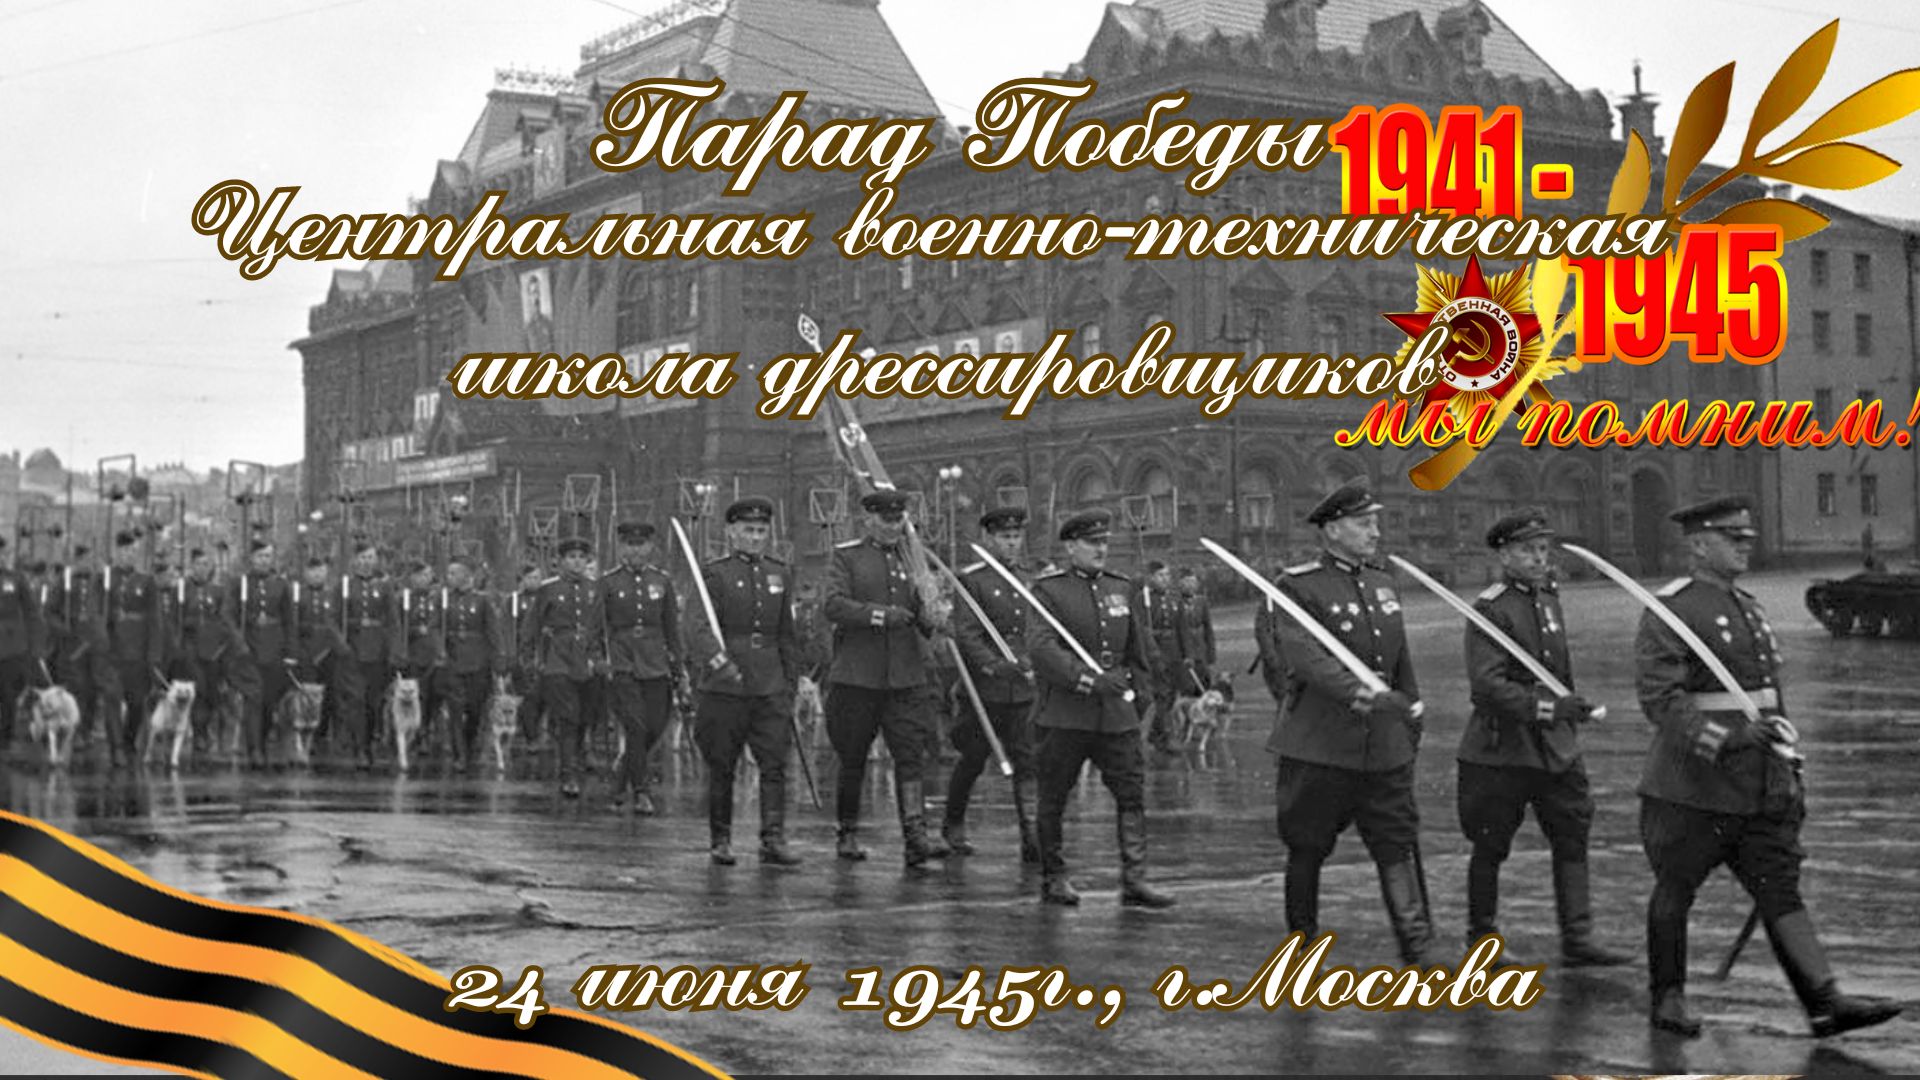 24 июня 1945г. ,г. Москва - ЦВТШД КА на Параде Победы в г. Москва.